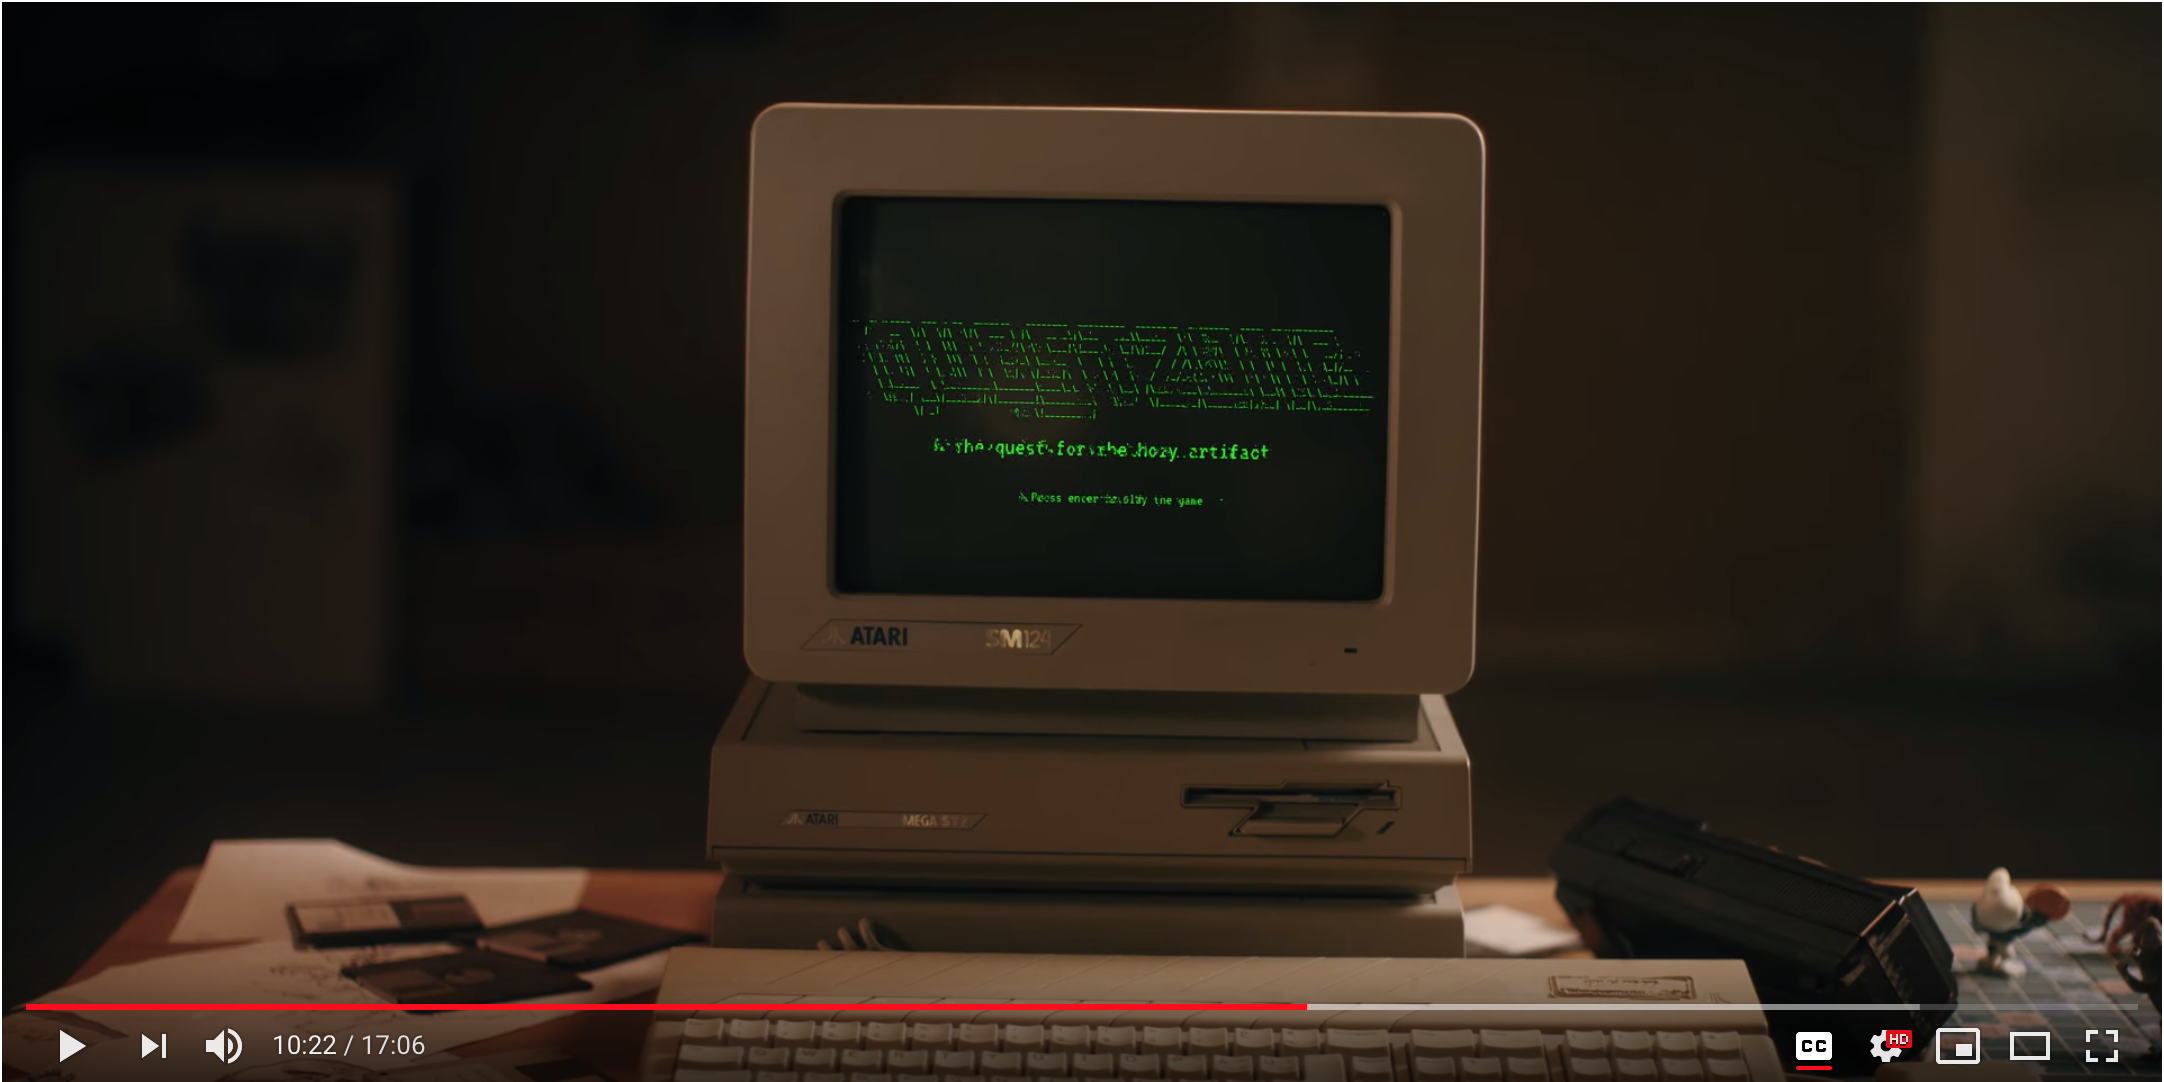 Atari Mega ST2 (screenshot from the movie)